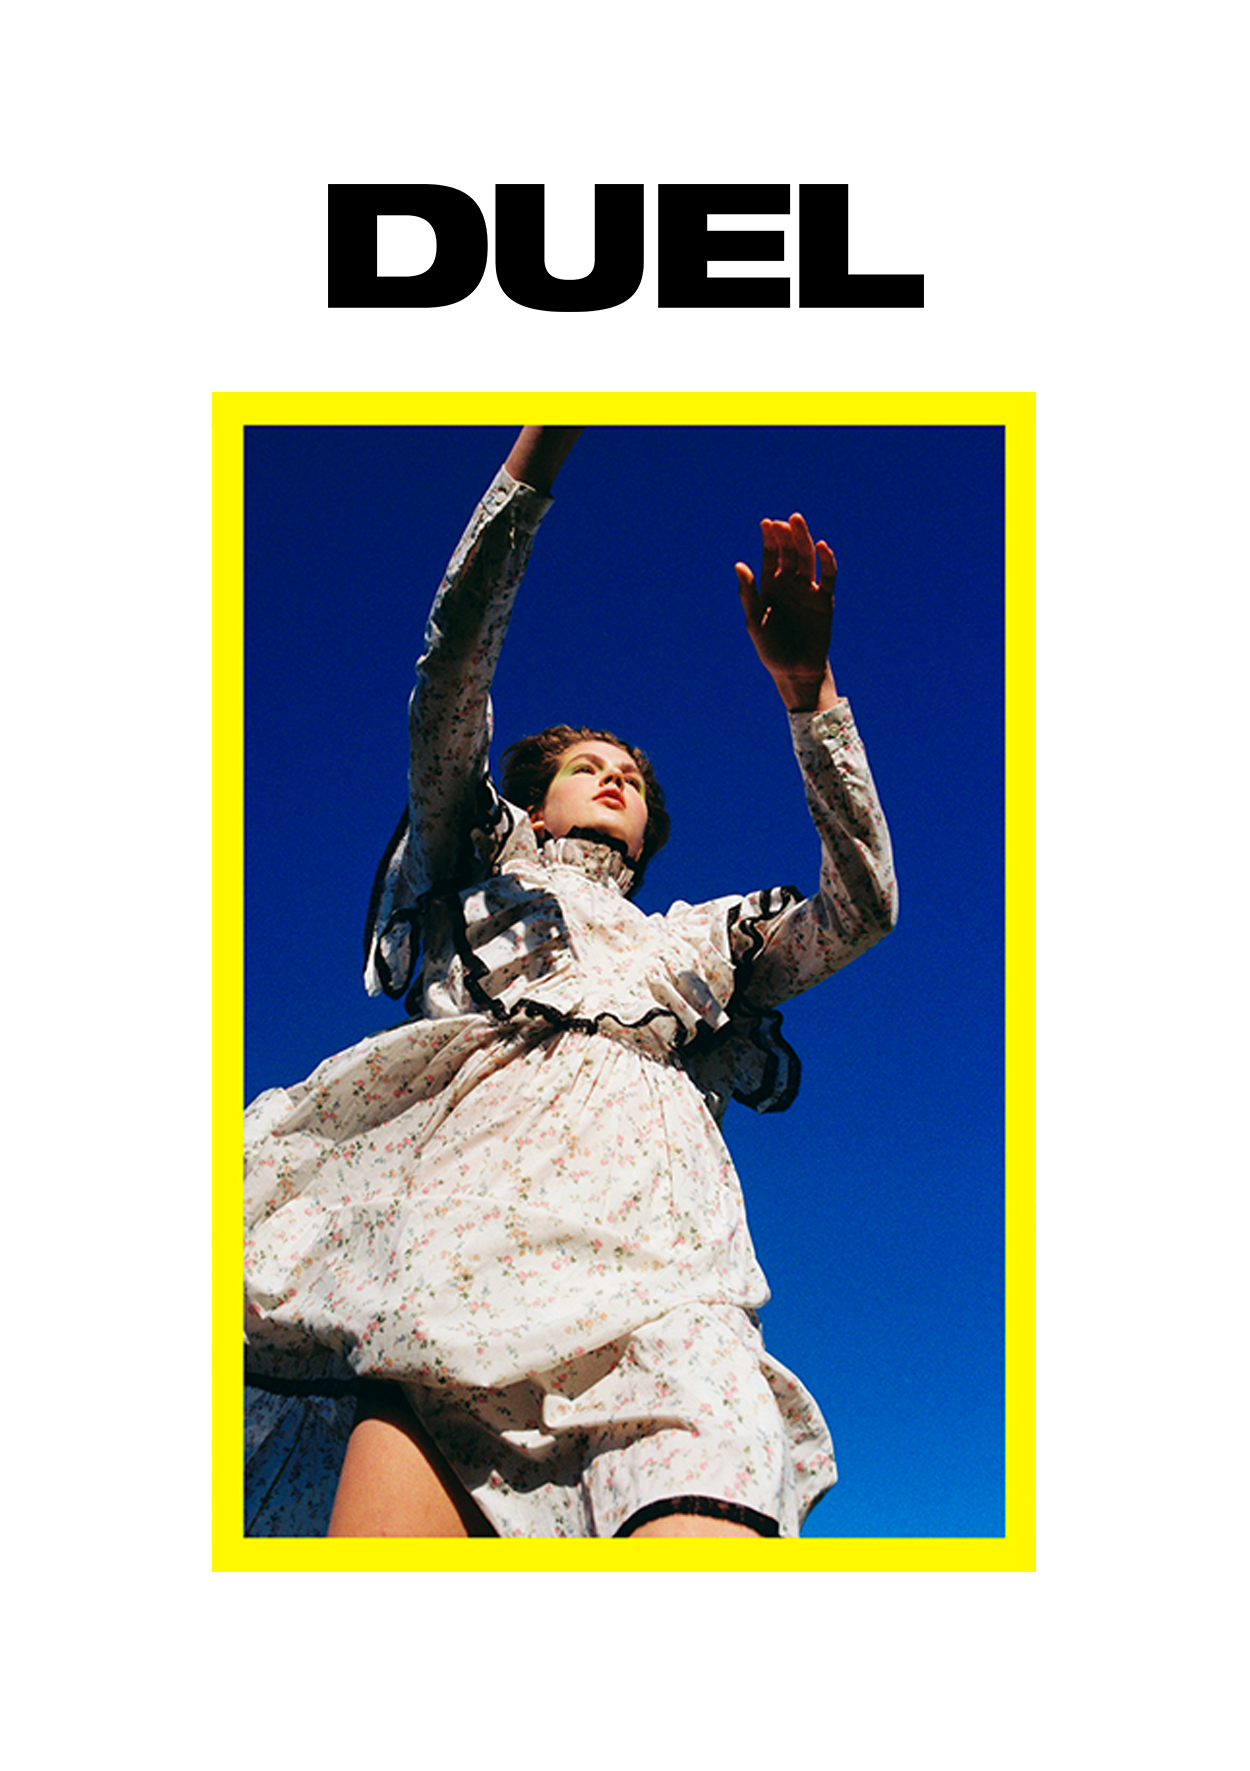 duel magazine